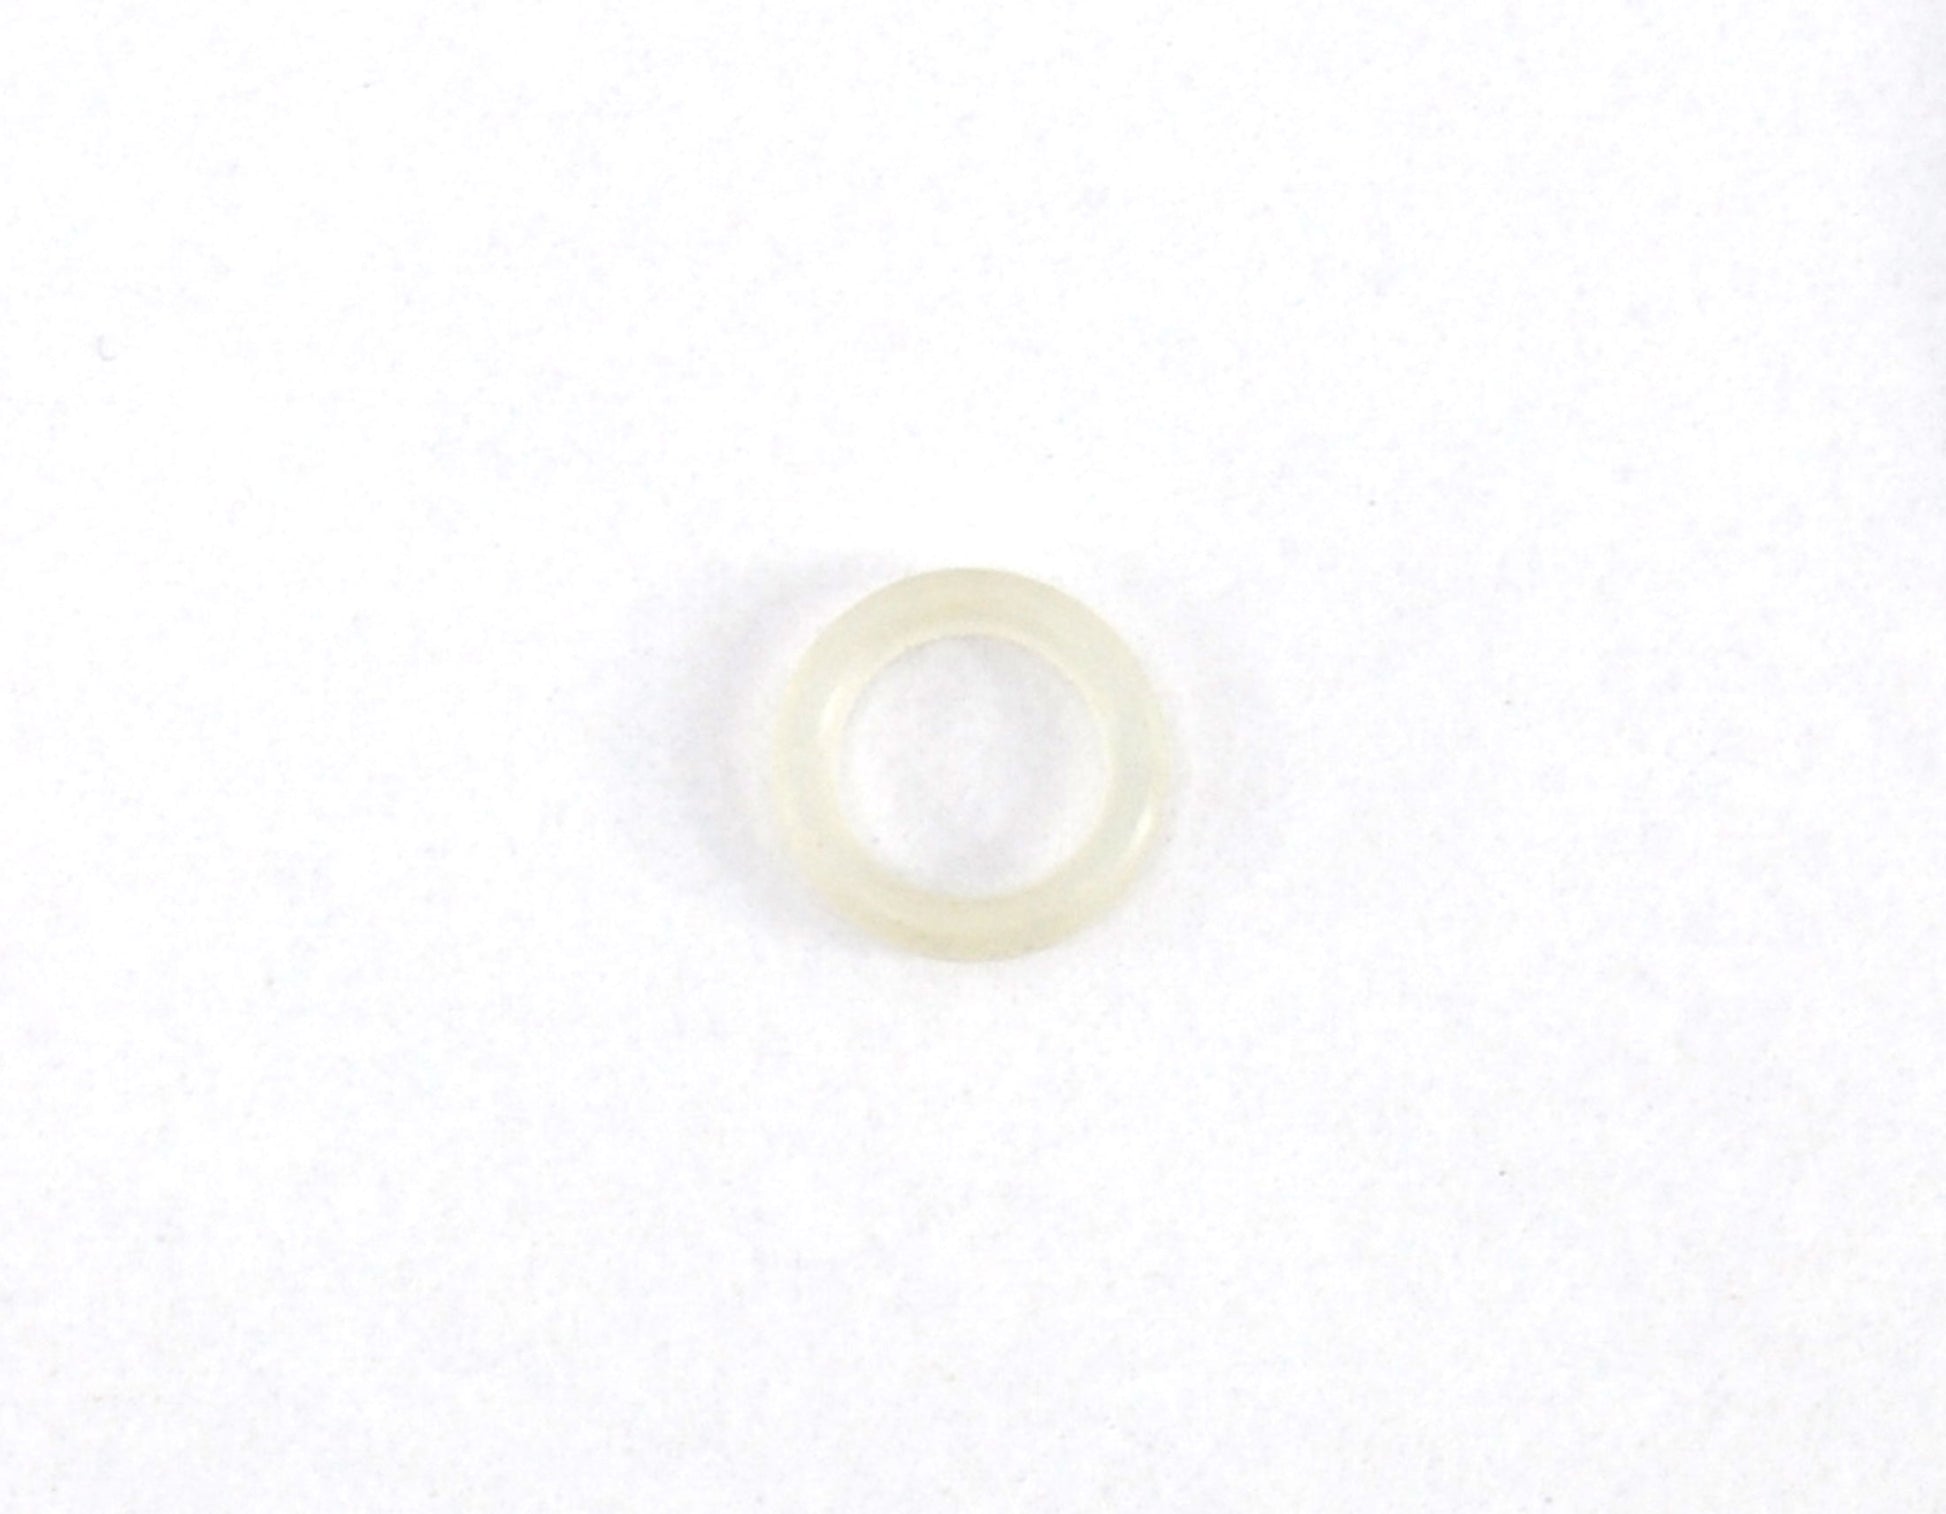 Empire Factory Seal 011/70 Urethane O Ring (.301 ID) #10608 - Empire